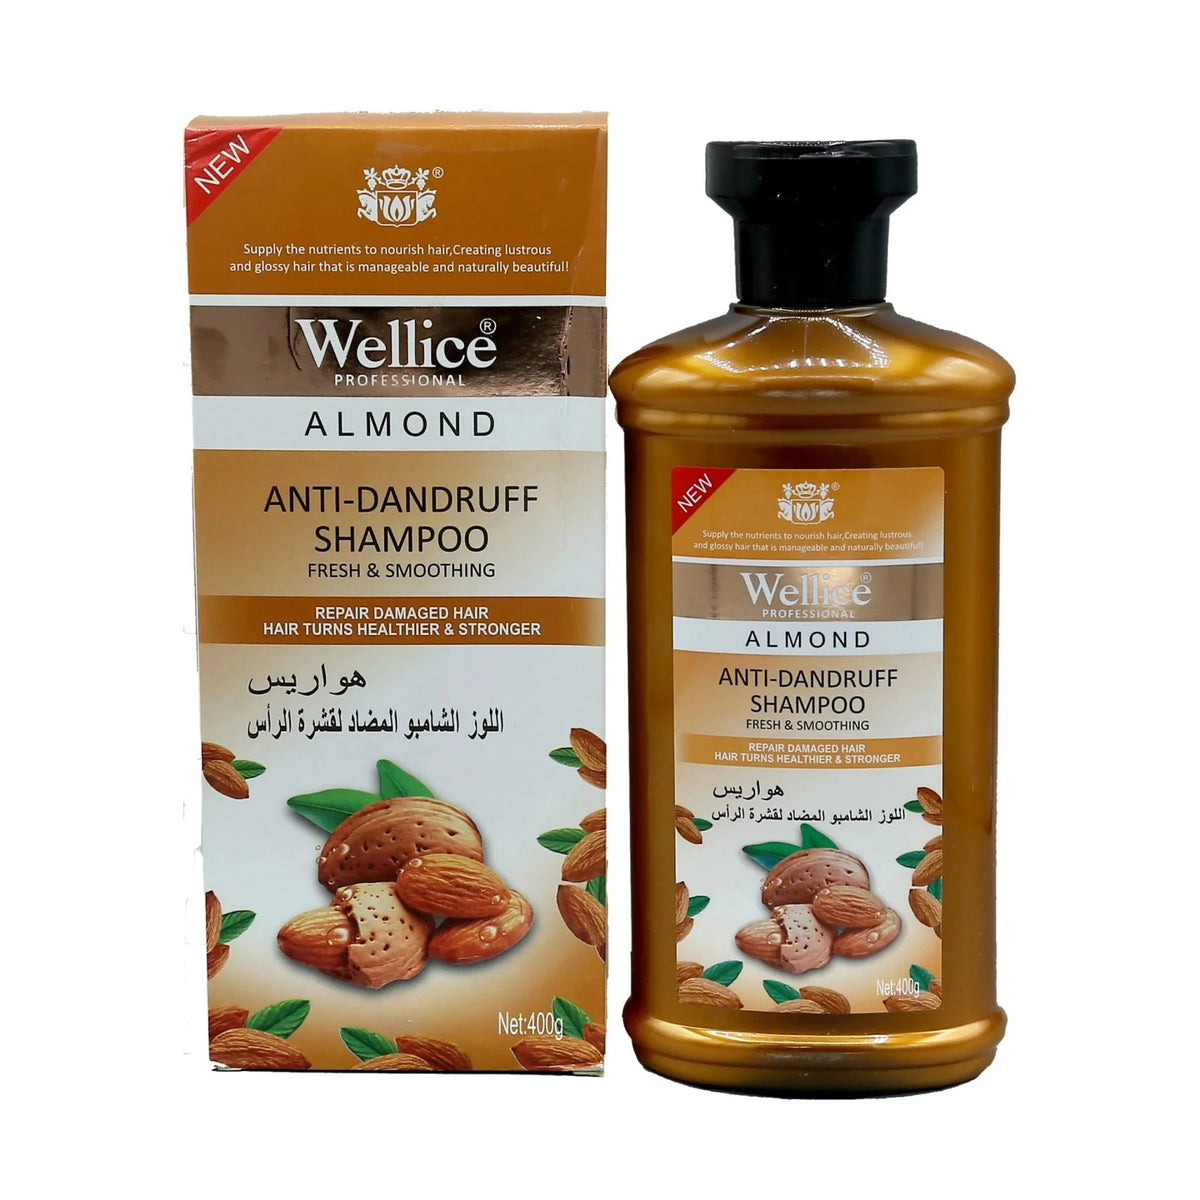 Wellice Almond AntiDandruf Shampoo